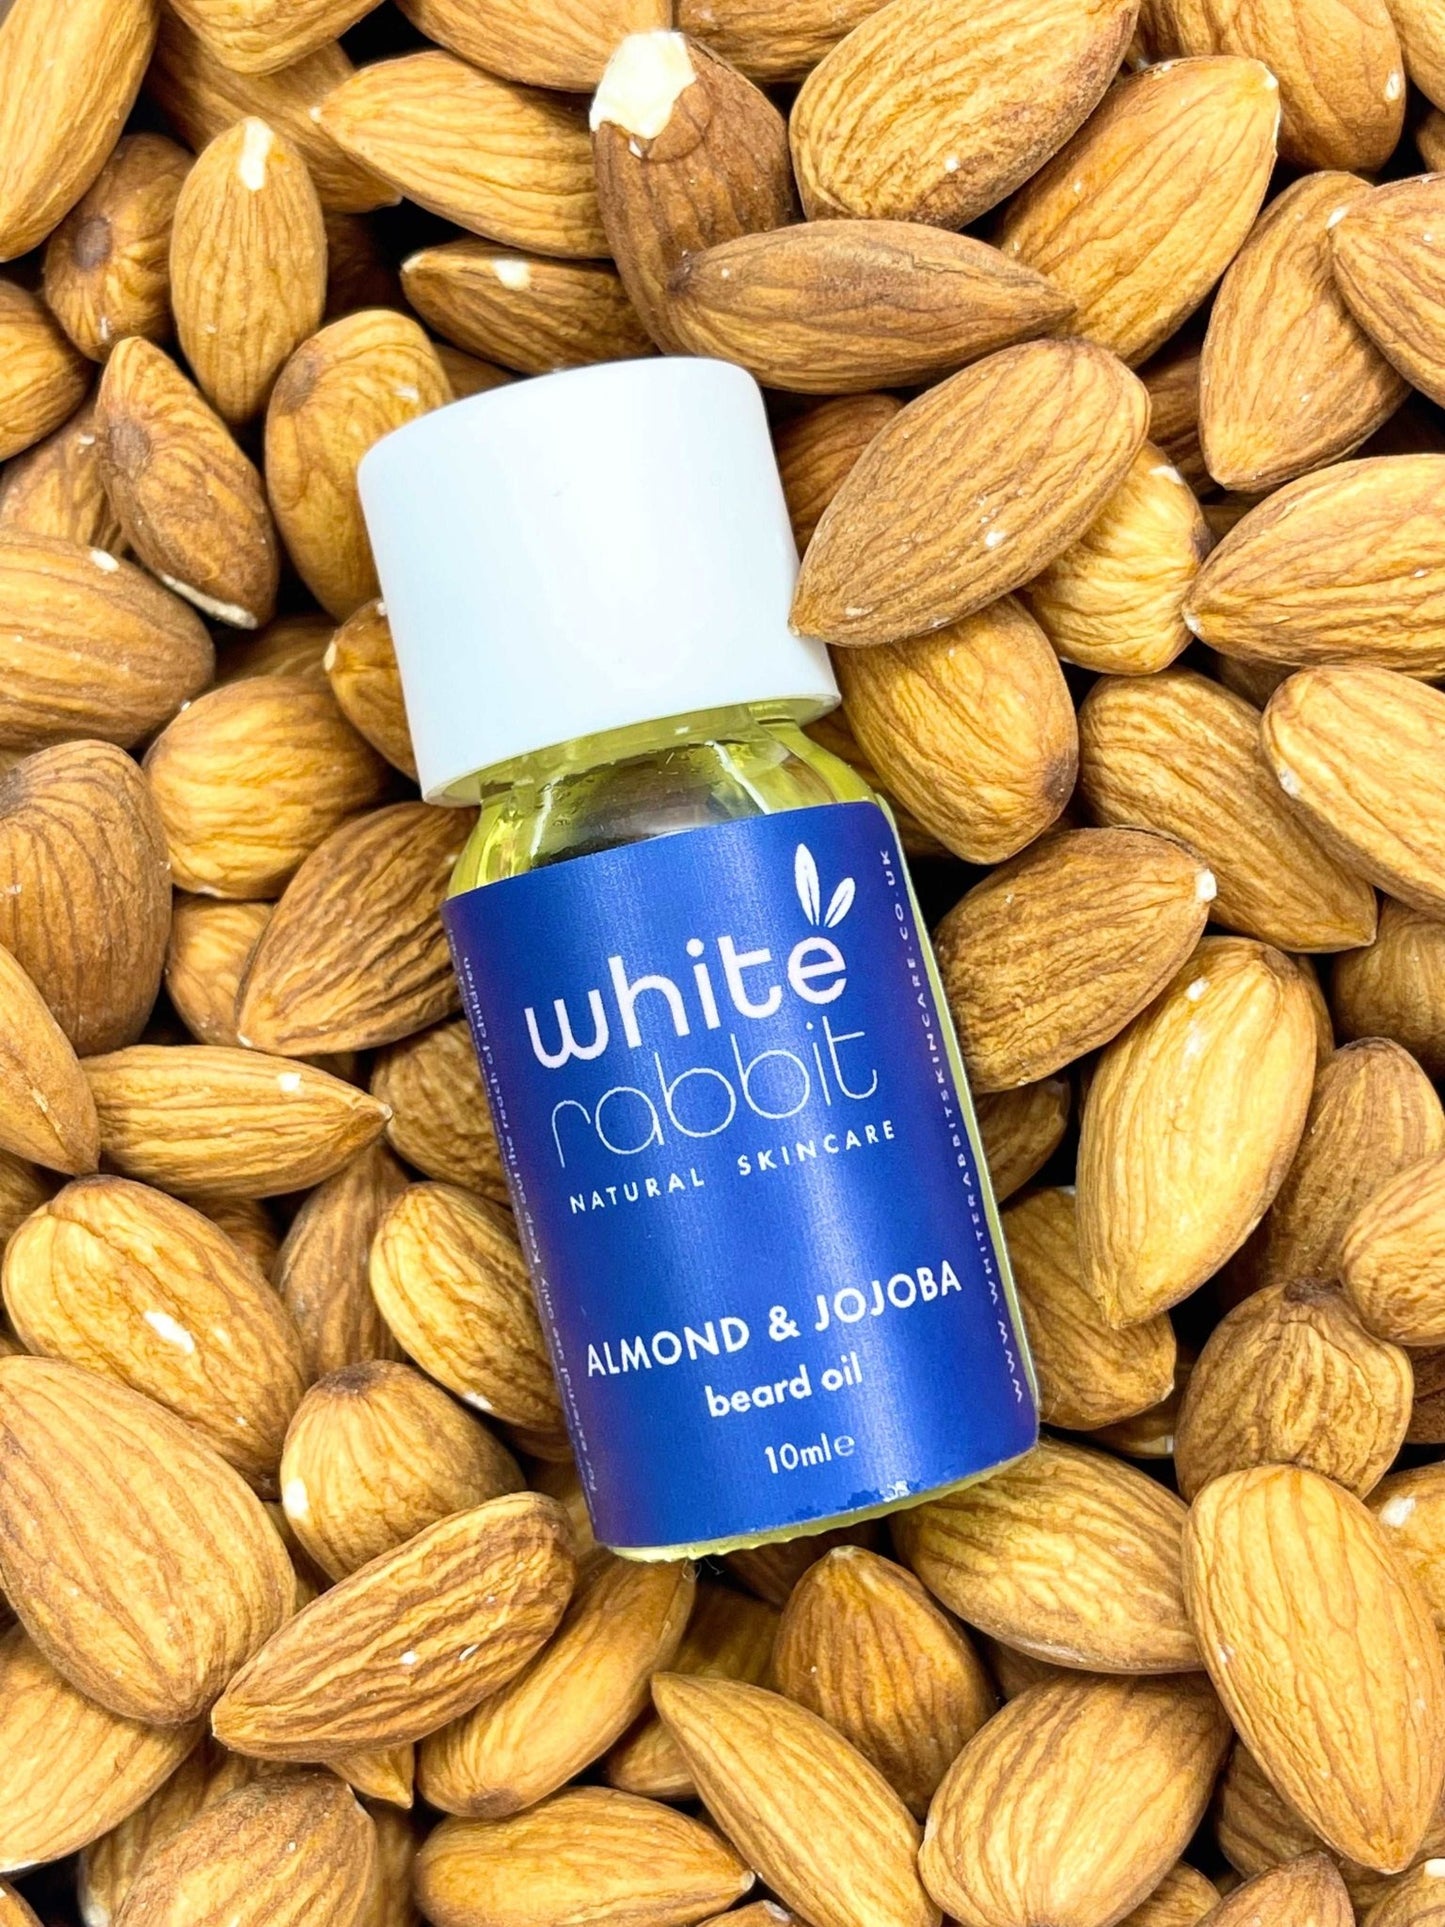 Almond & Jojoba Beard Boosting Oil - 10ml travel/trial size - White Rabbit Skin Care